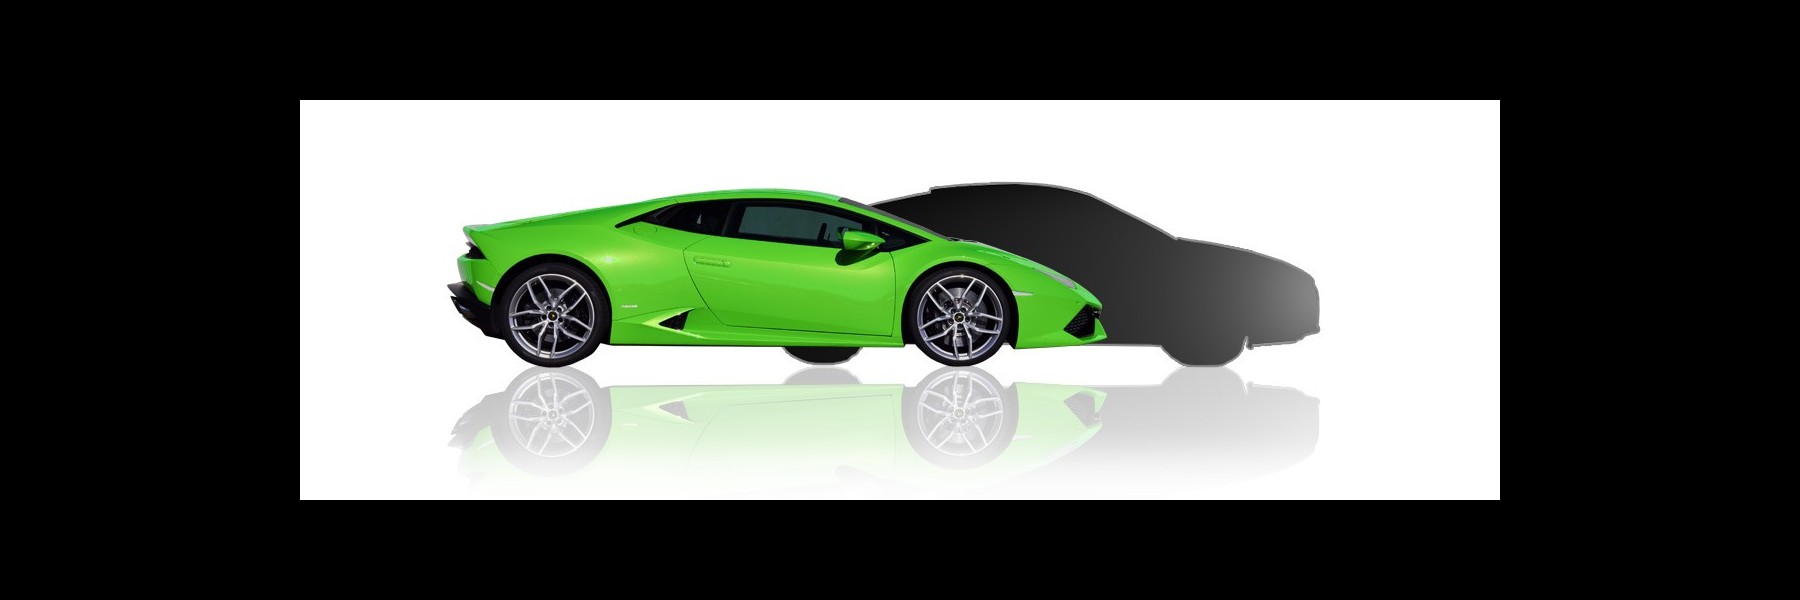 Combo Lamborghini + car of your choice